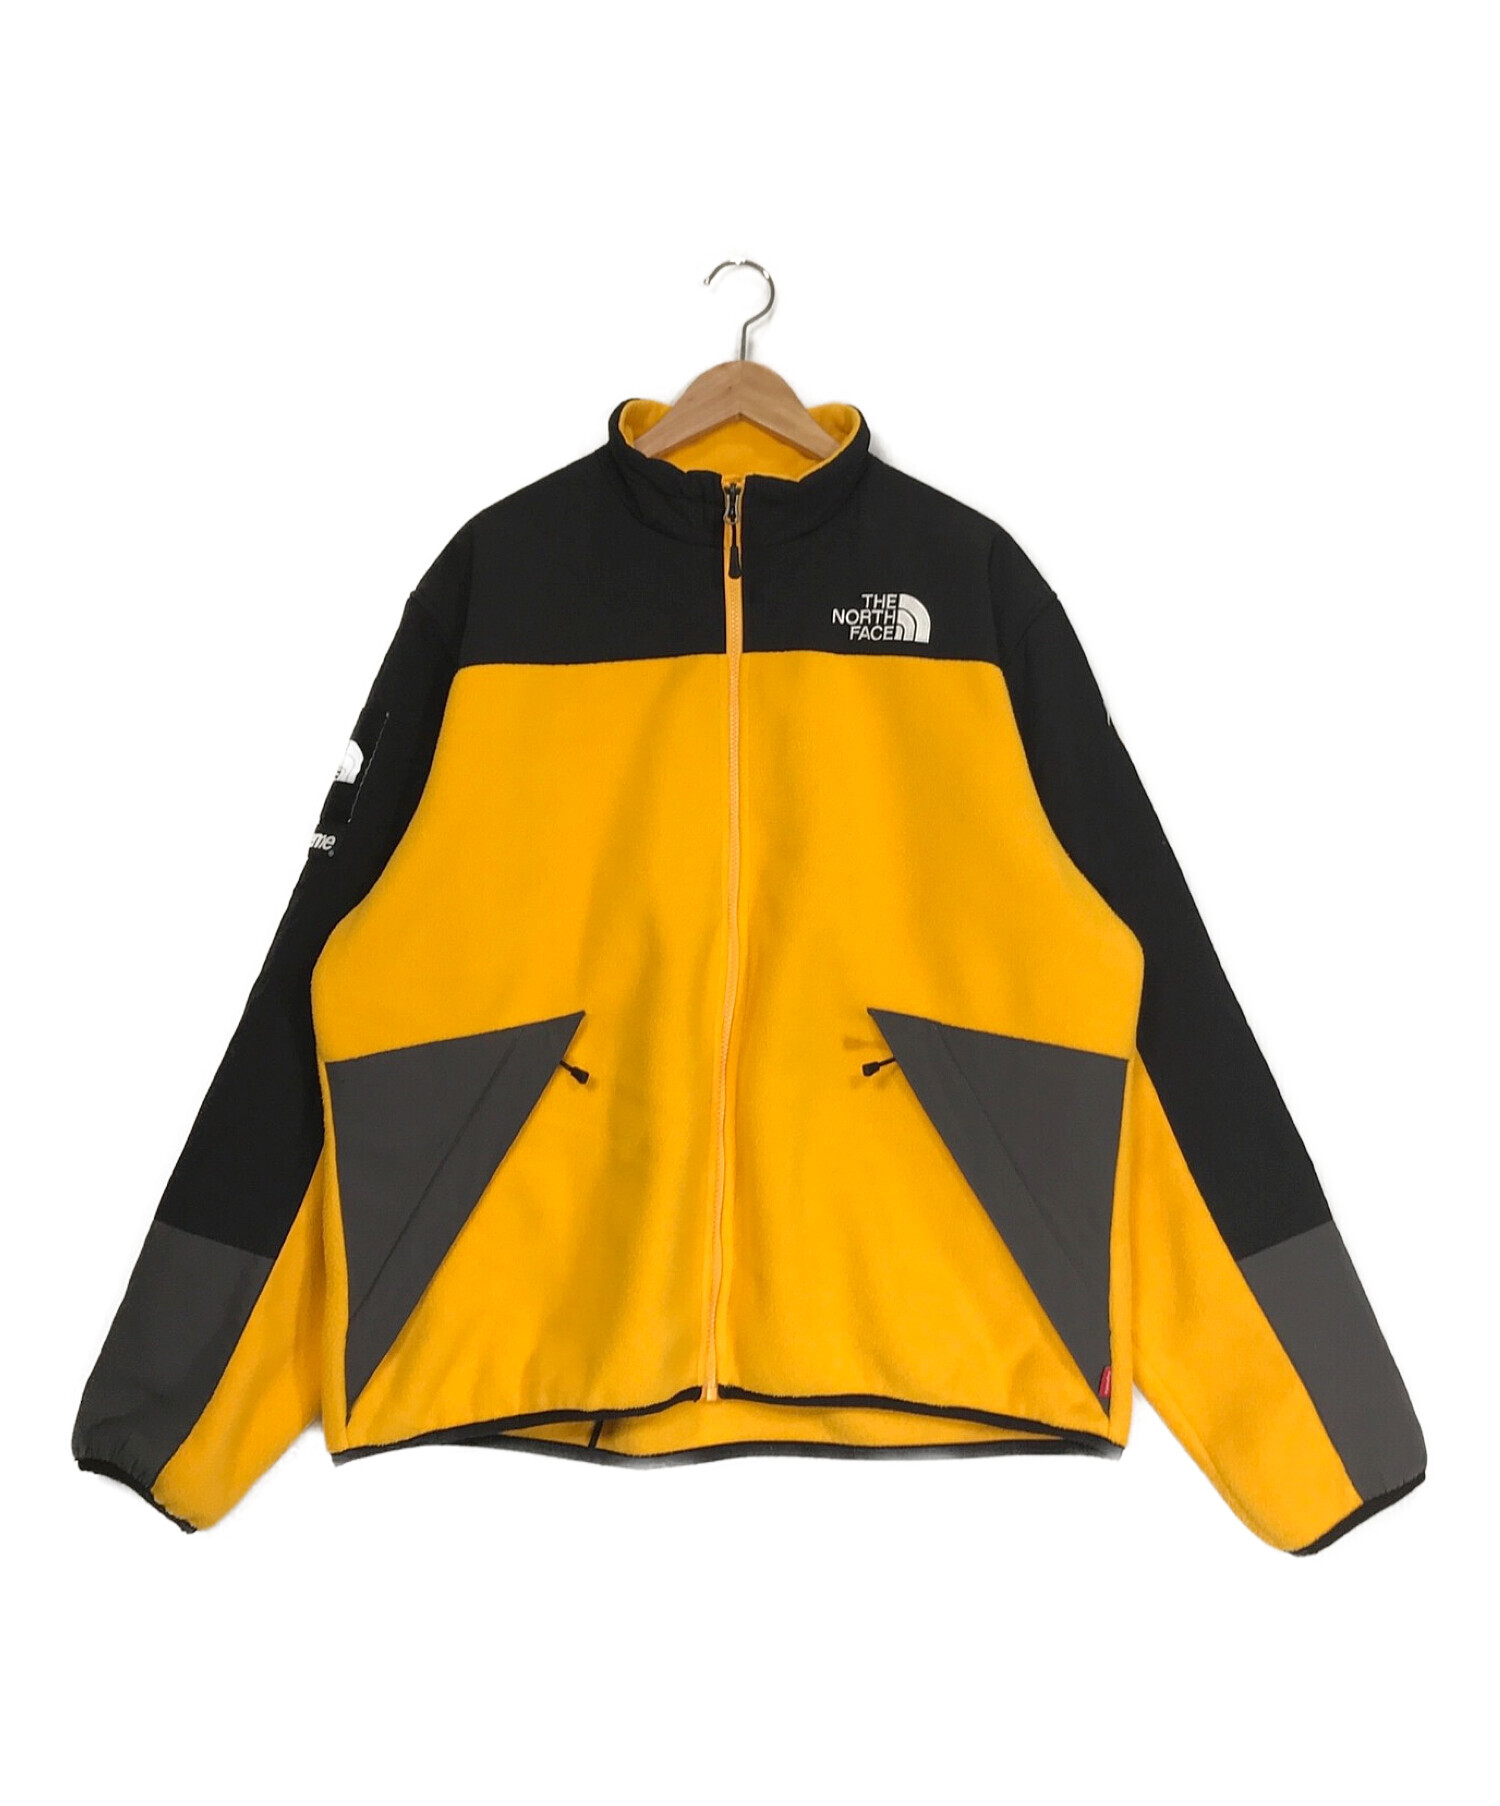 Lサイズ The North Face® RTG Fleece Jacket